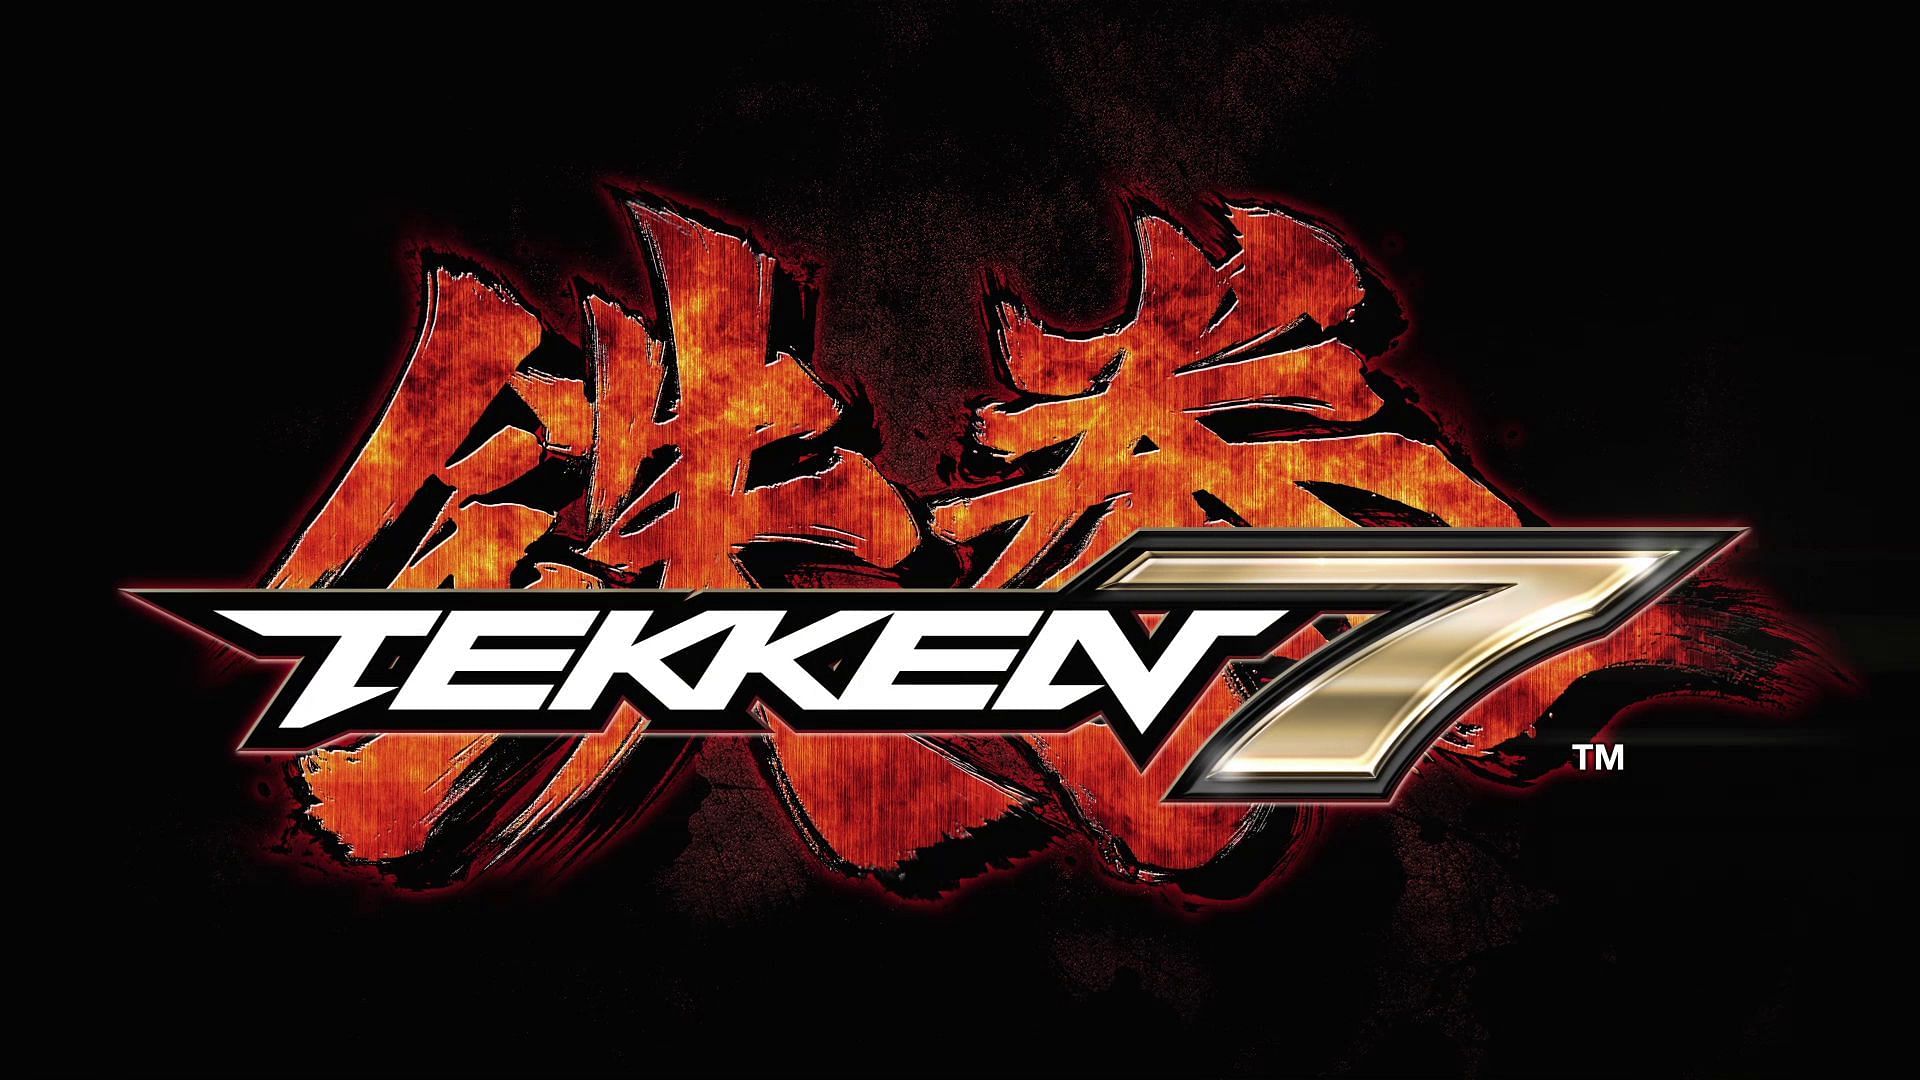 Tekken 7 (image via Bandai Namco)